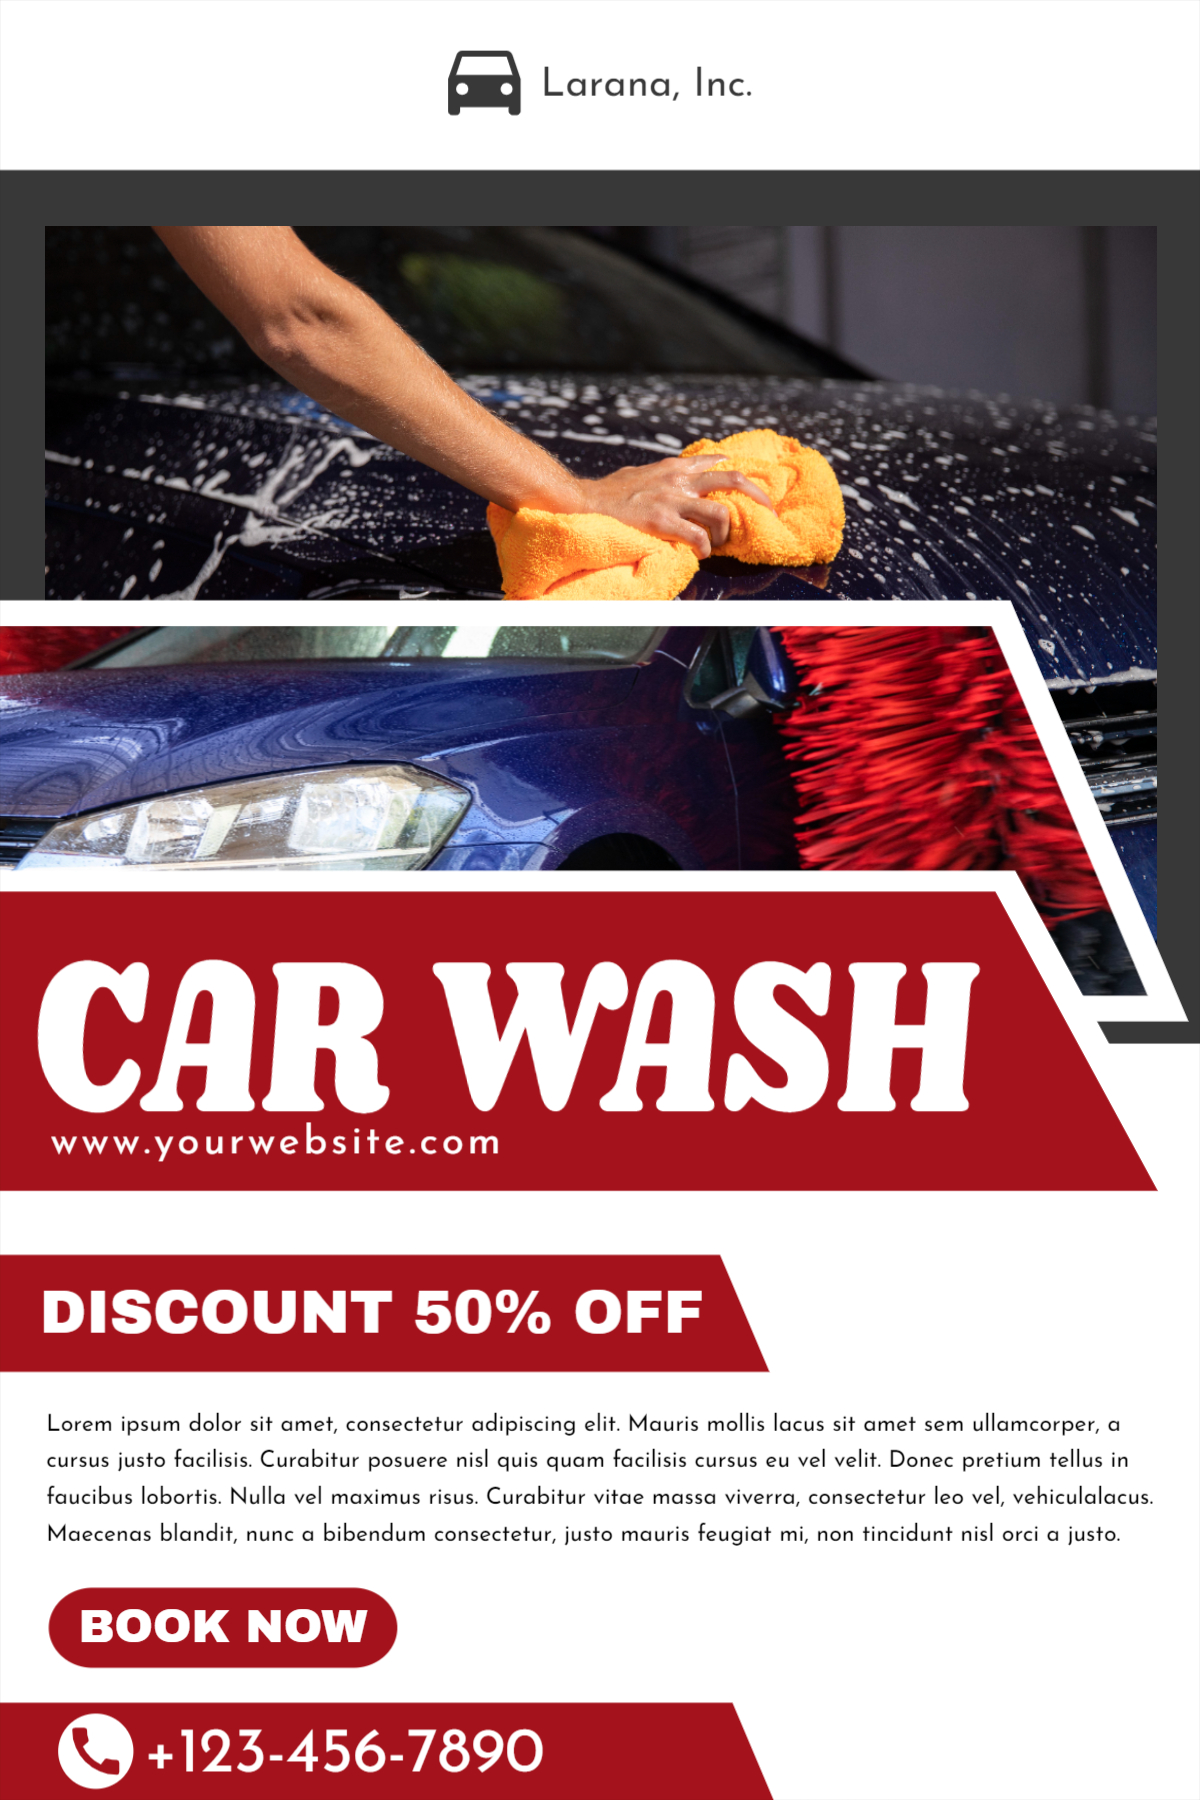 car wash poster design download for free